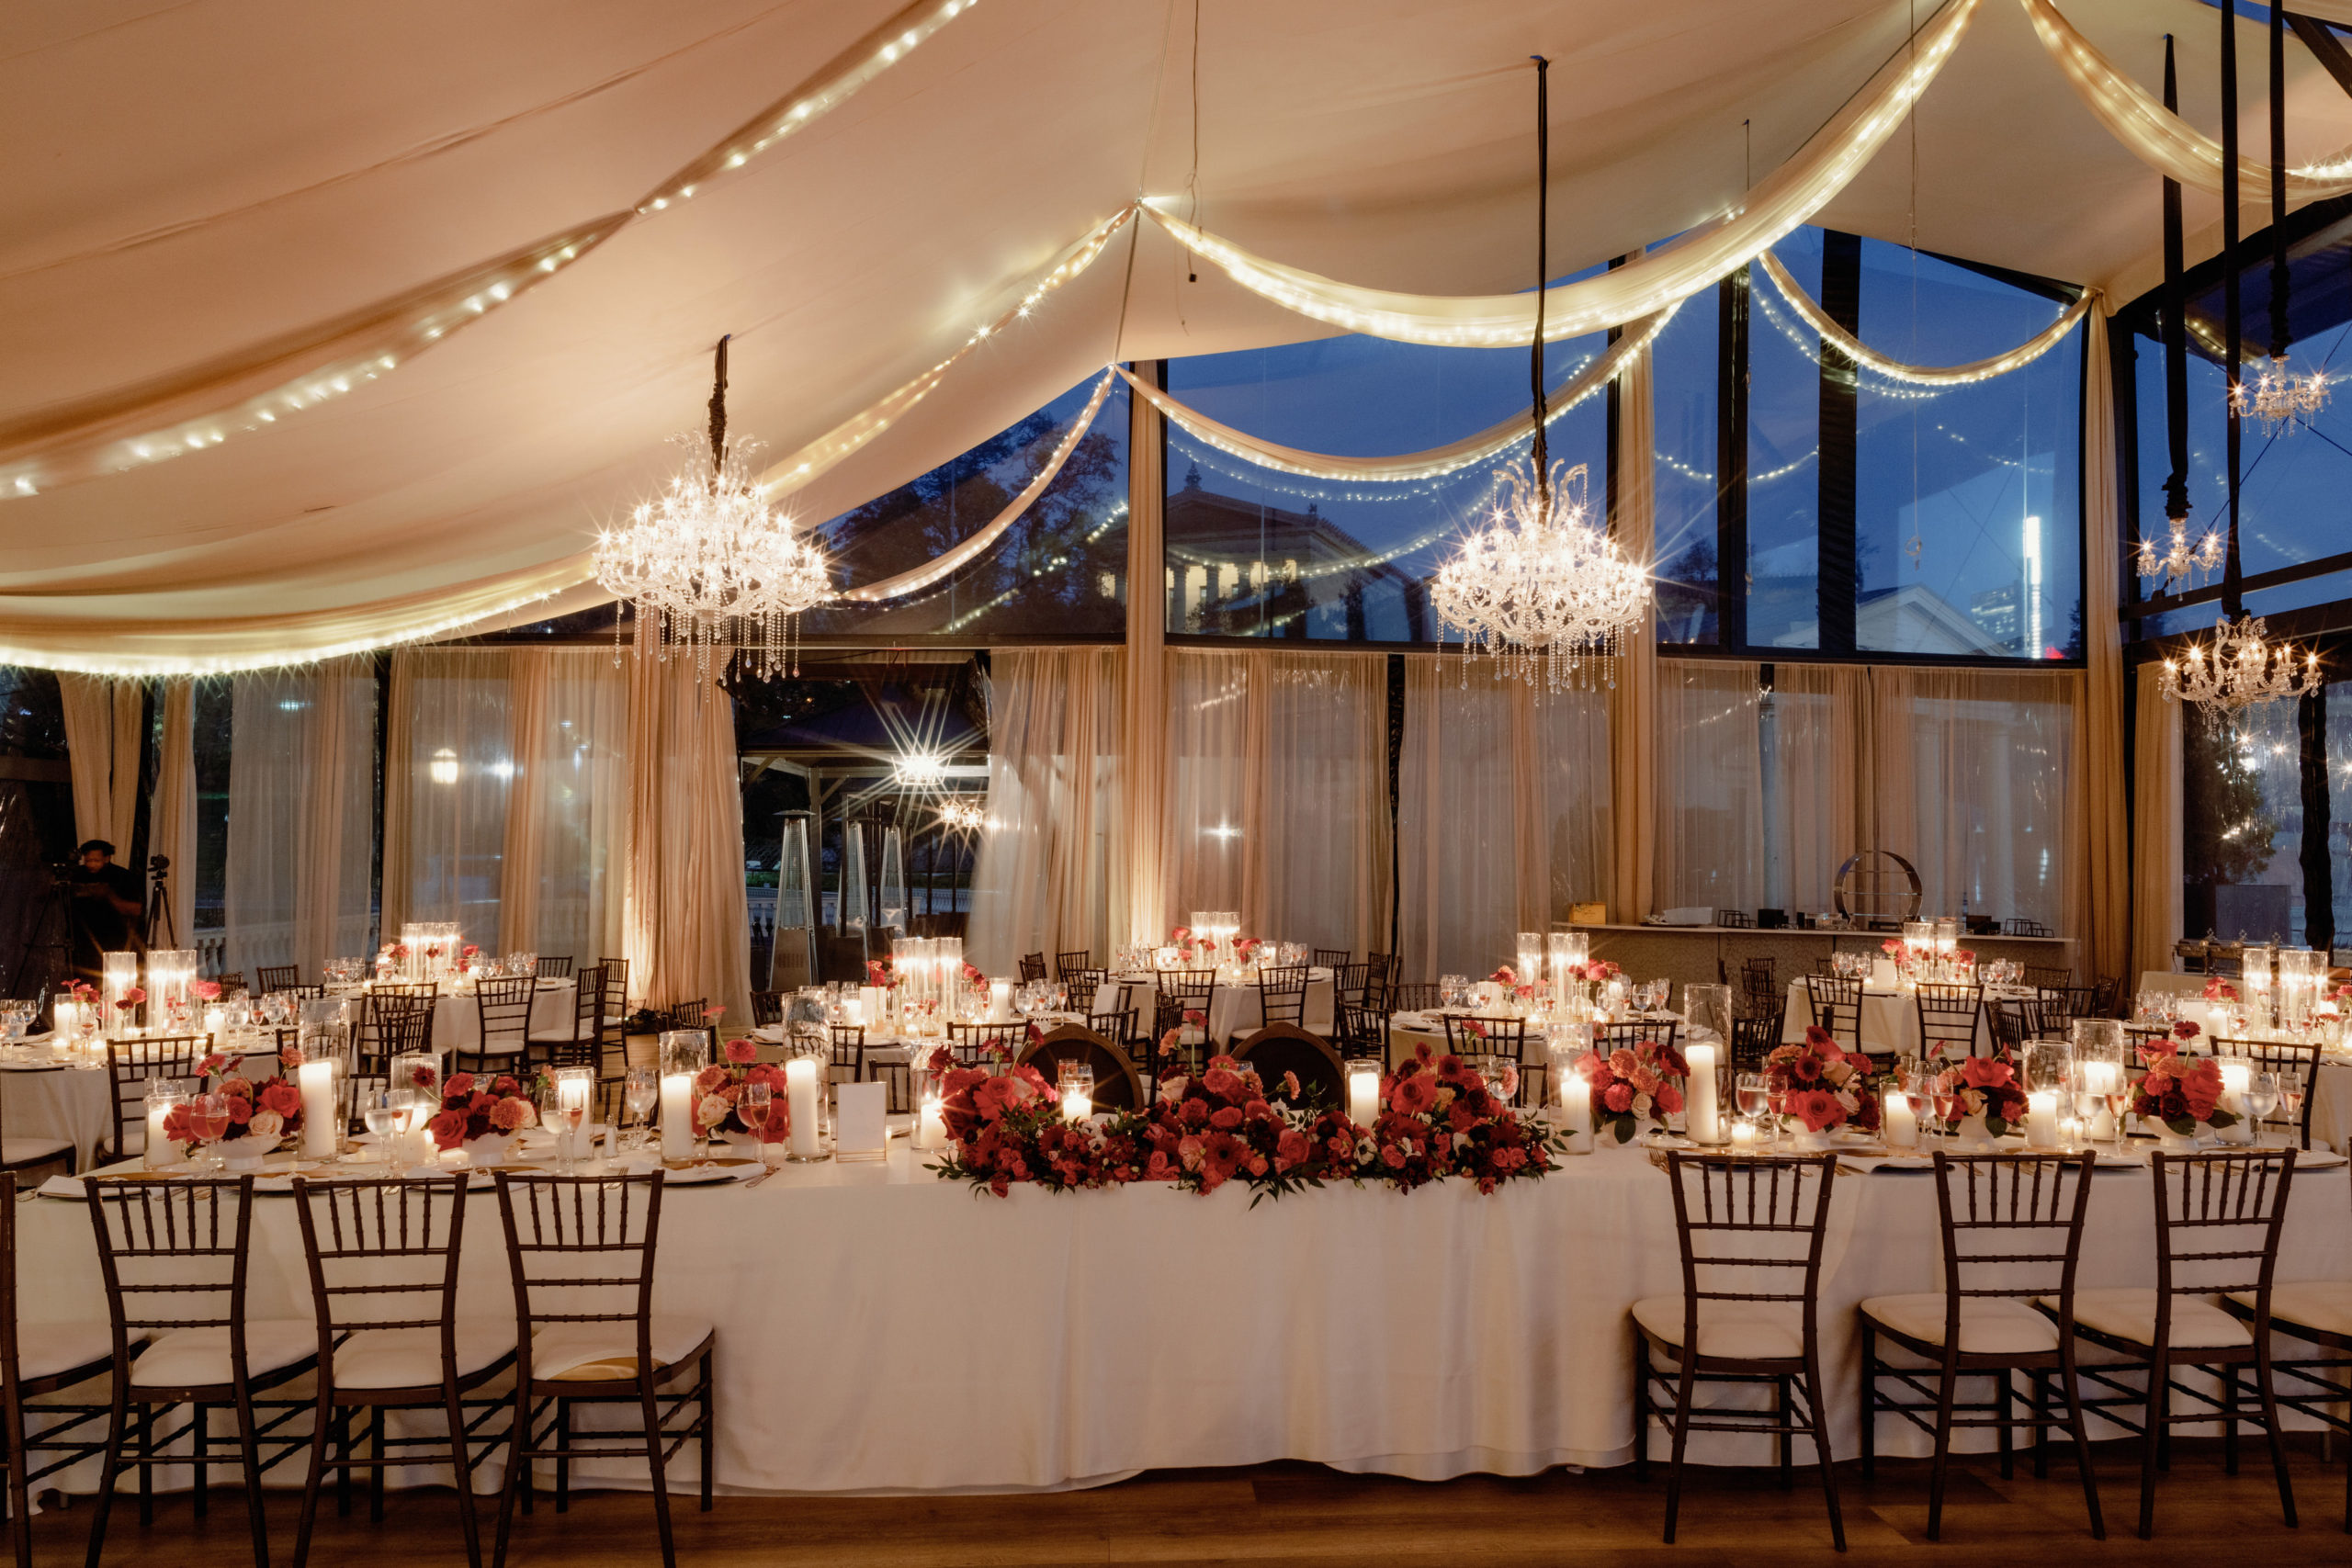 An elegant wedding dinner reception set-up. Luxury wedding venues image by Jenny Fu Studio